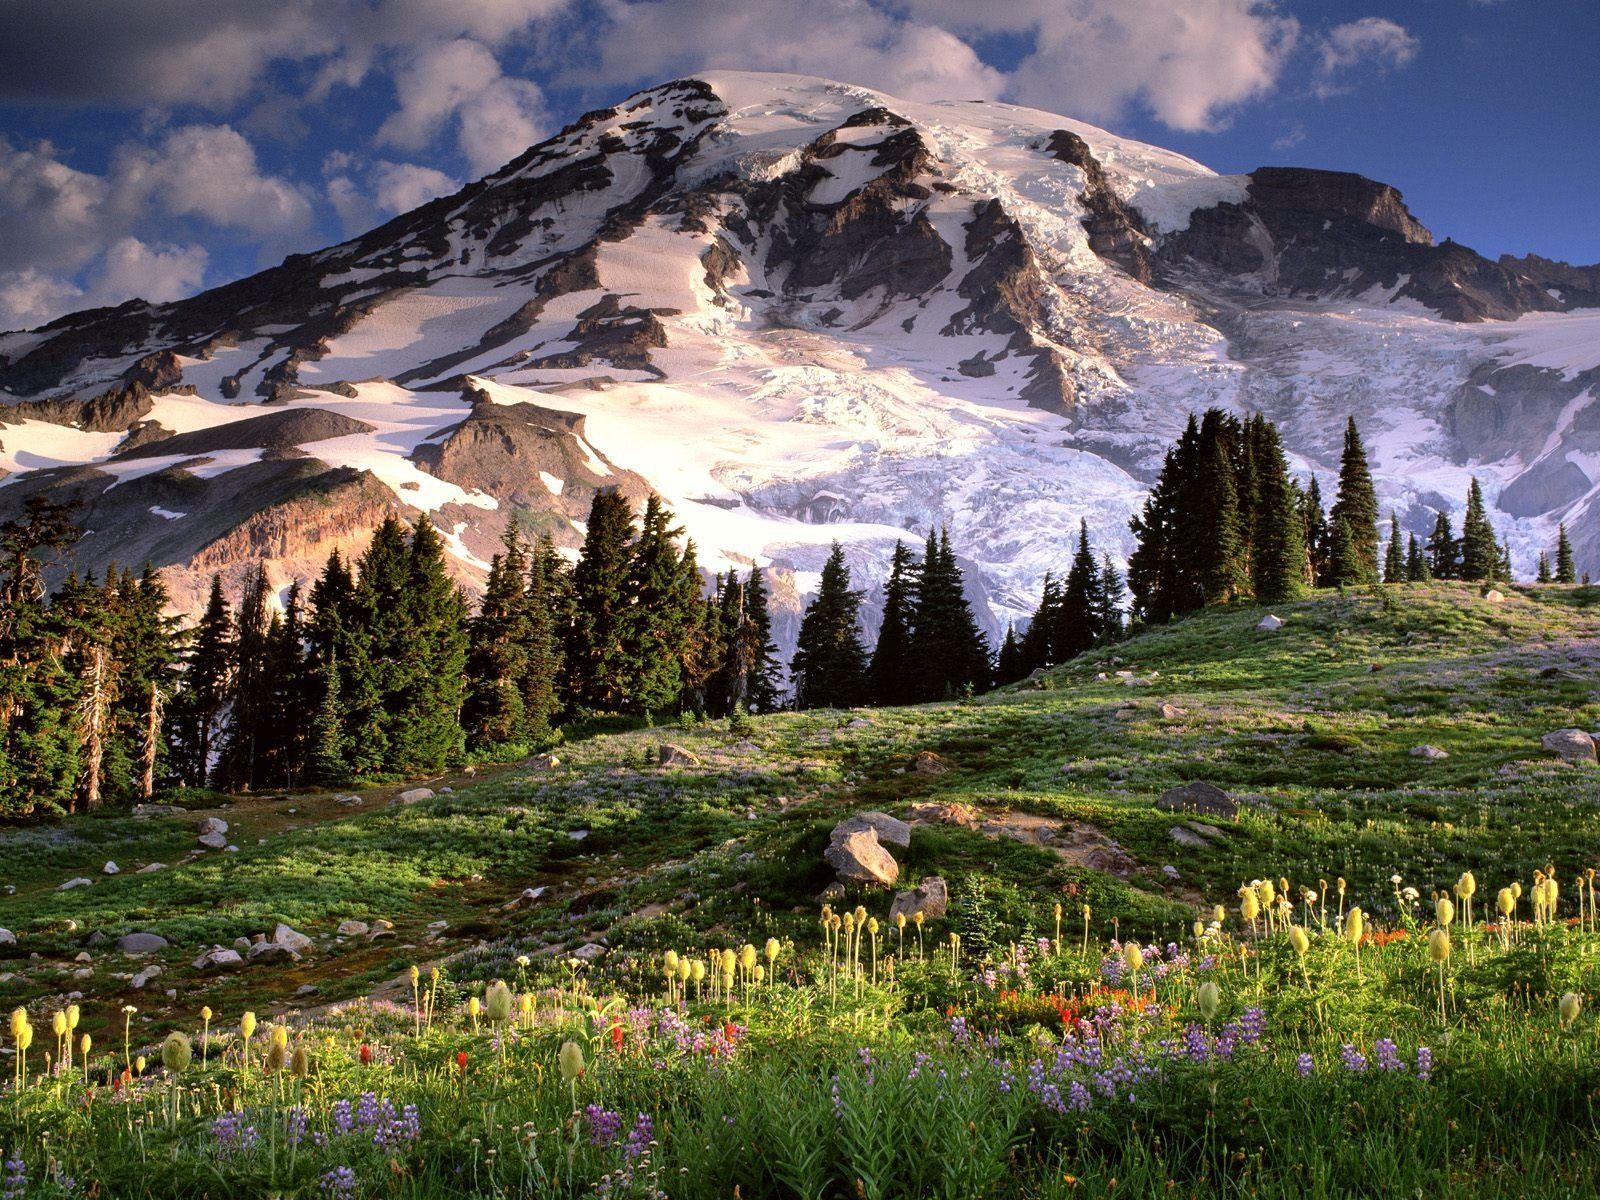 Spring Mountain Scene Windows 8 Wallpaper background image